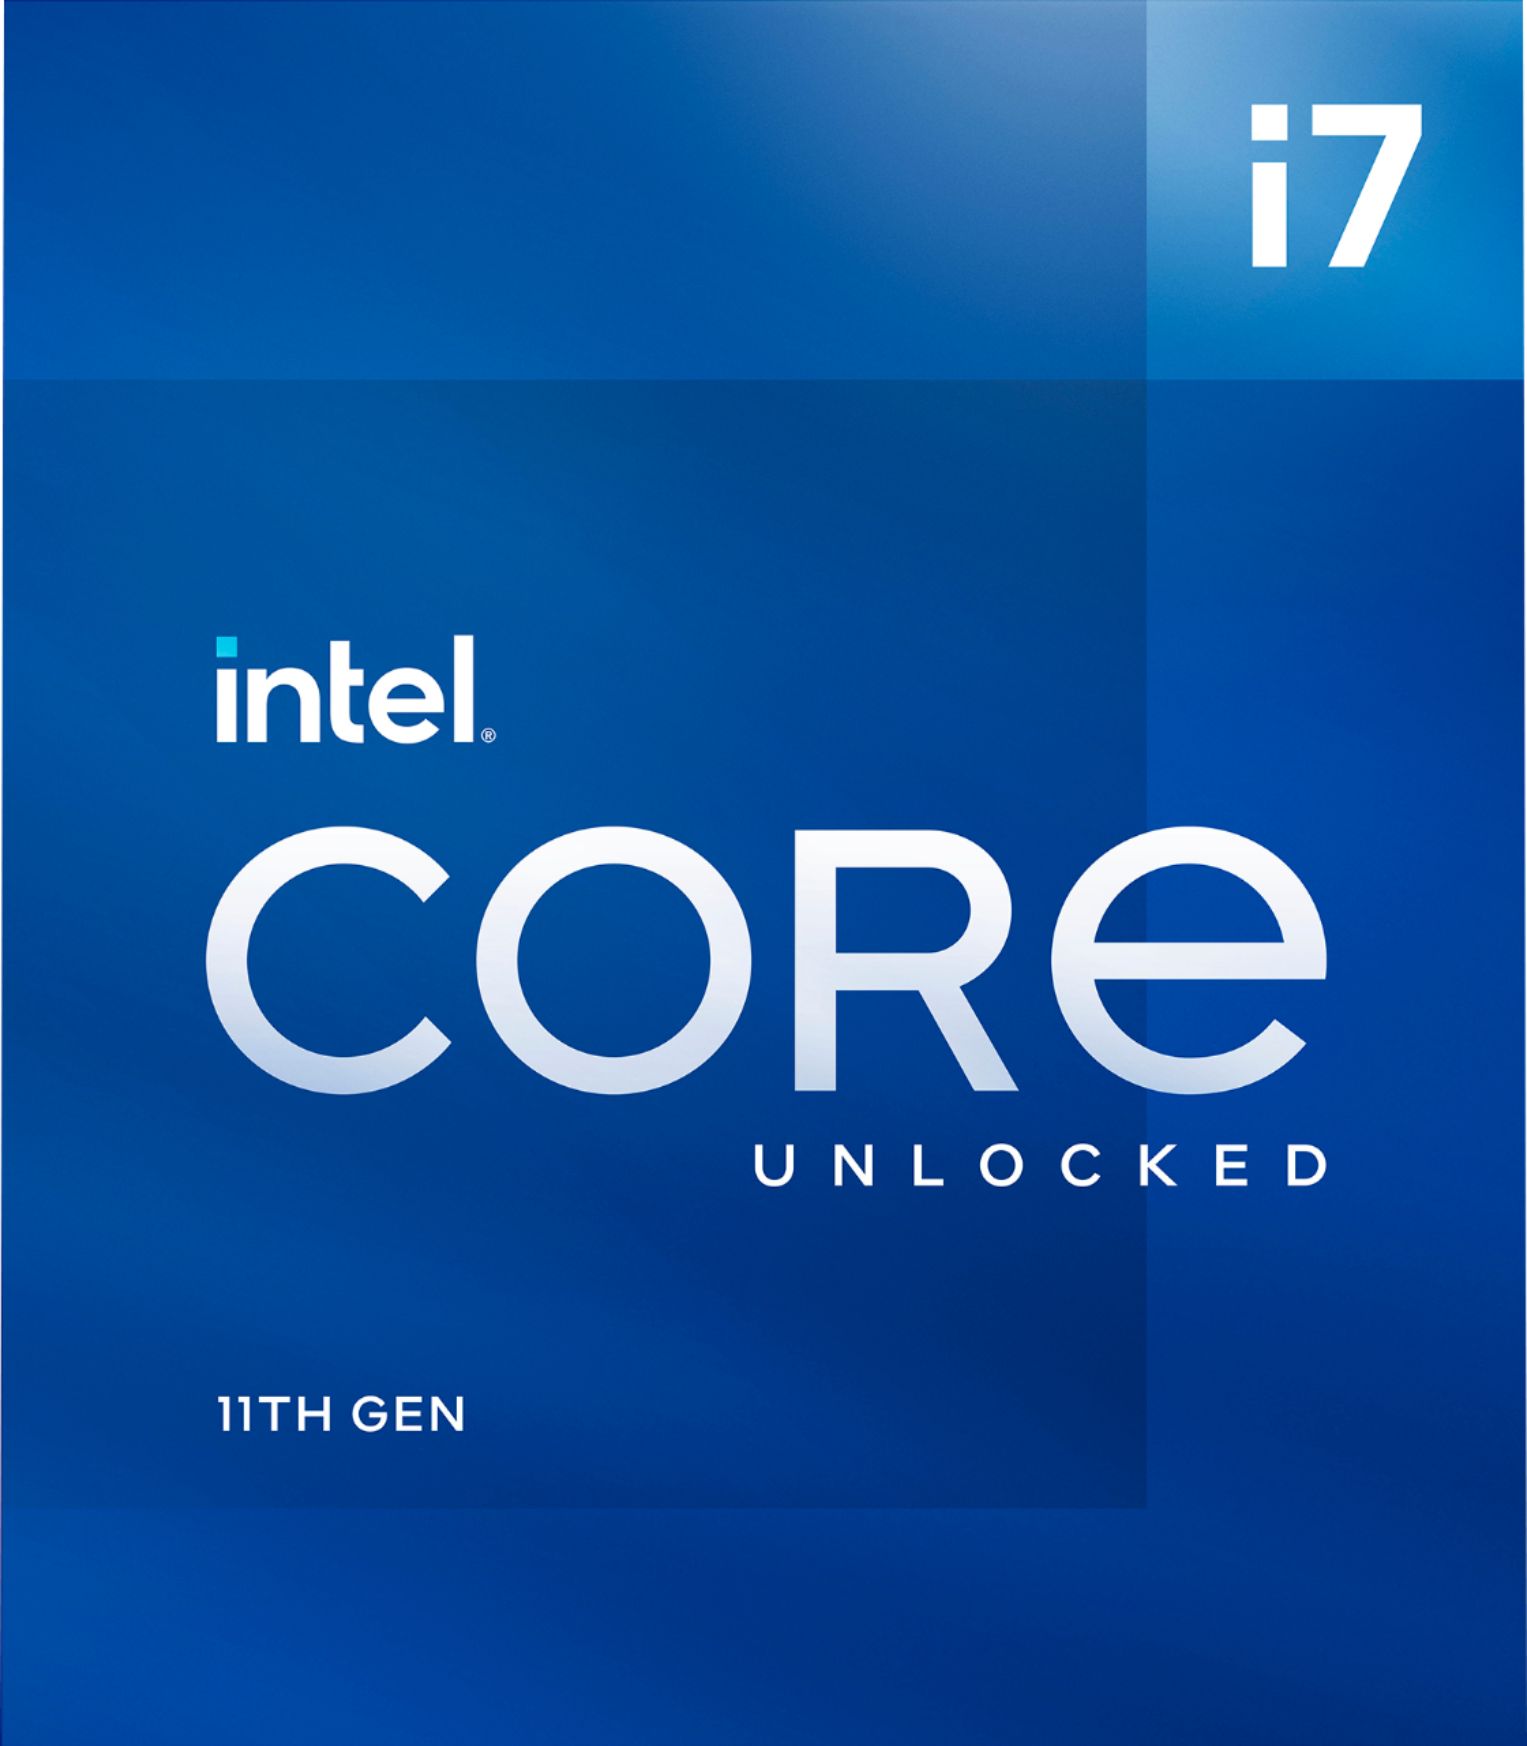 Assert Excursie Versterken Intel Core i7-11700K 11th Generation 8 Core 16 Thread 3.6 to 5.0 GHz  LGA1200 Unlocked Desktop Processor BX8070811700K - Best Buy